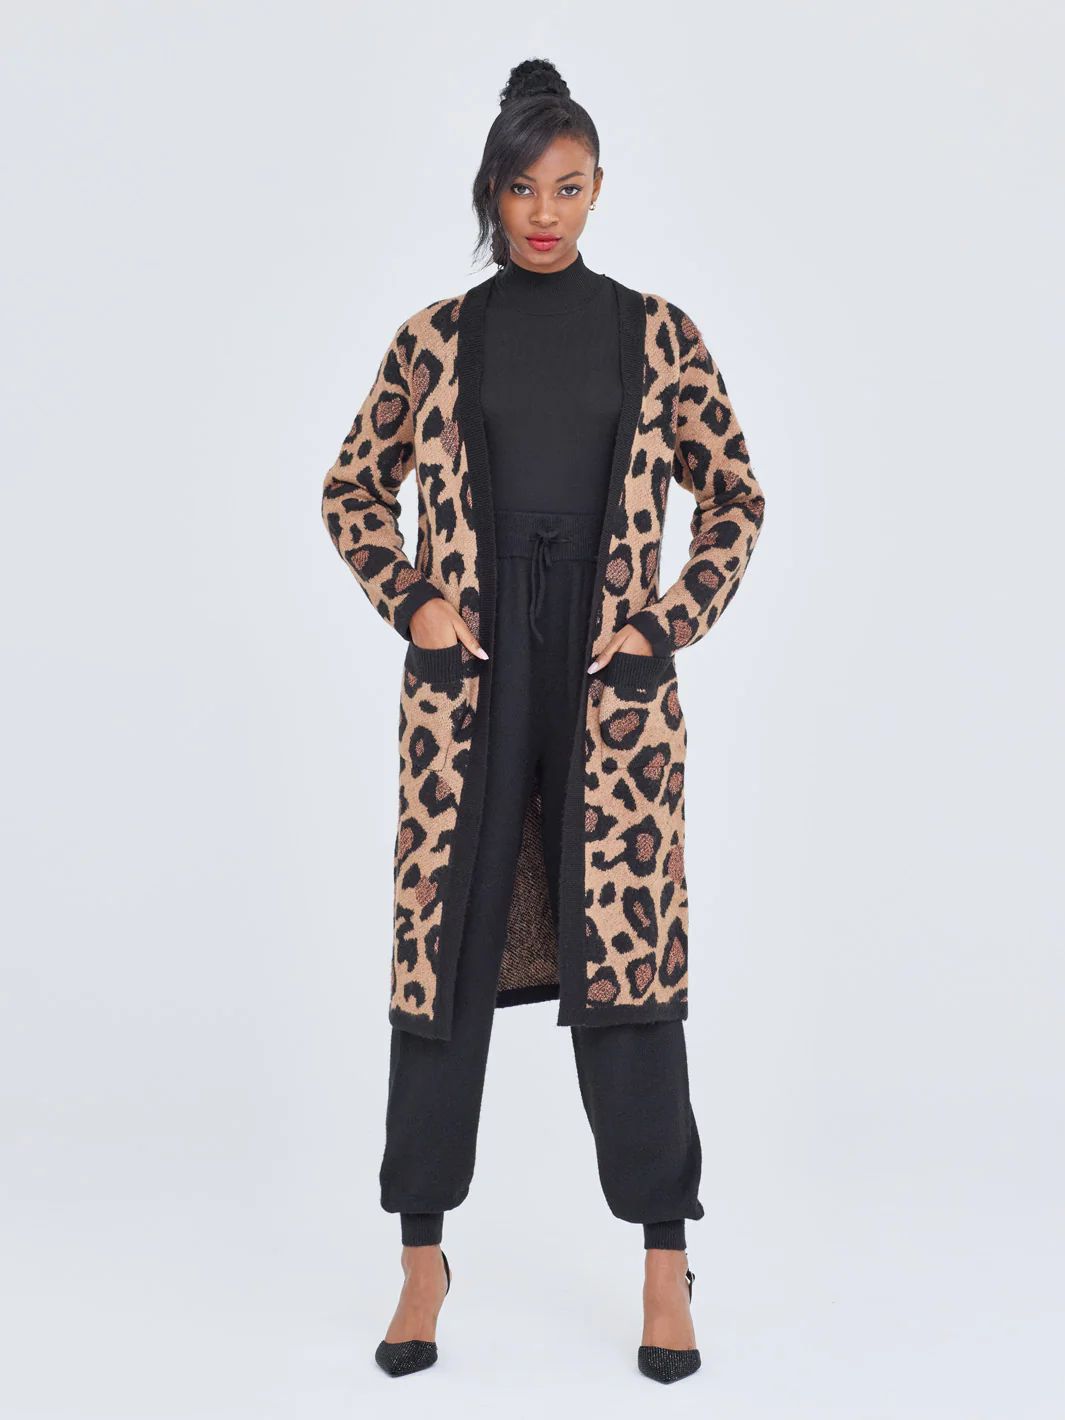 Gabrielle Union Women's Leopard Duster Jacket Sweater in Black XS Lord & Taylor | Lord & Taylor